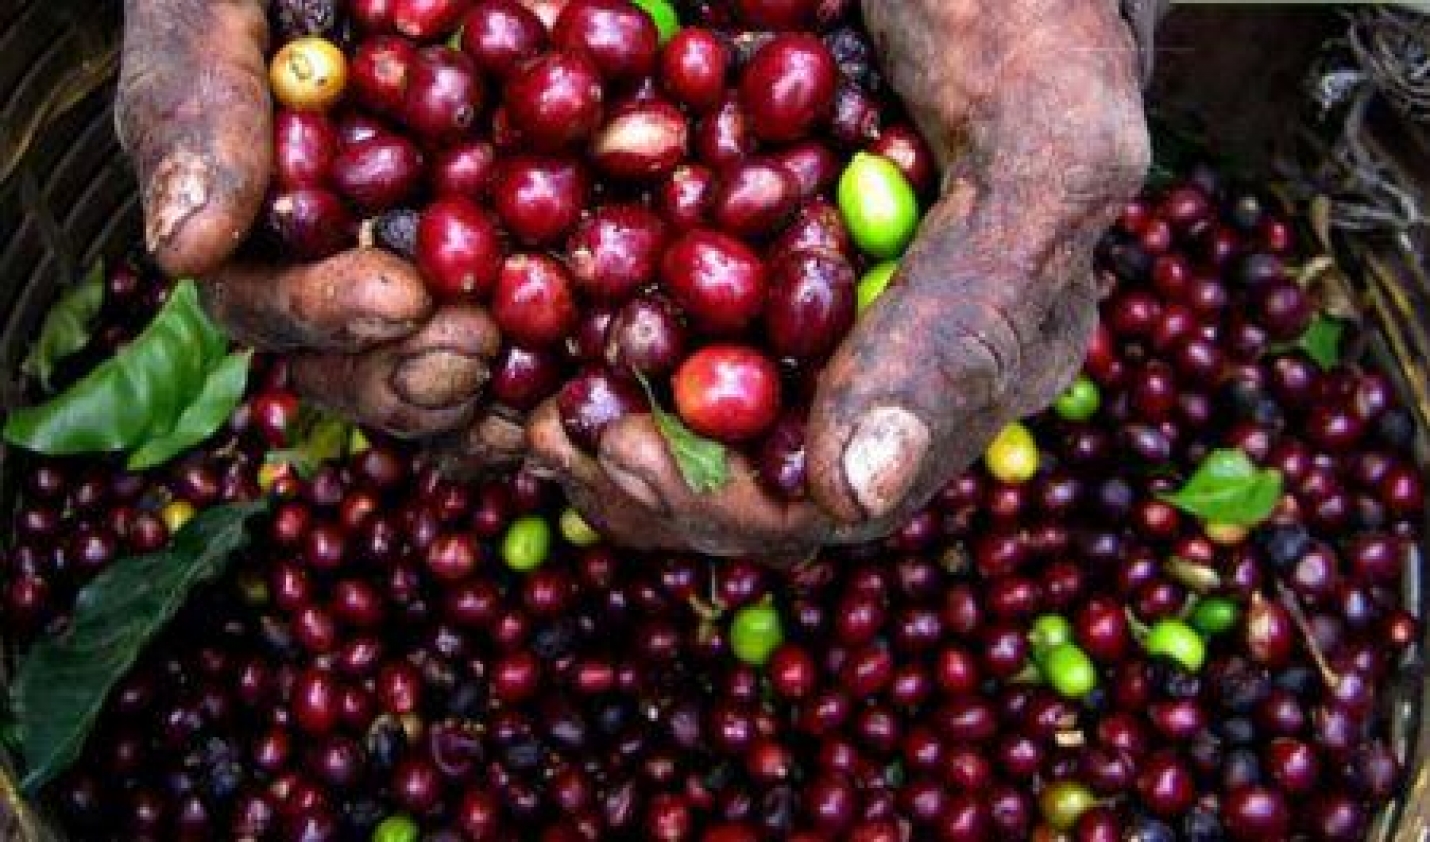 Le Rwanda rate ses objectifs d’exportation de café en 2019/2020